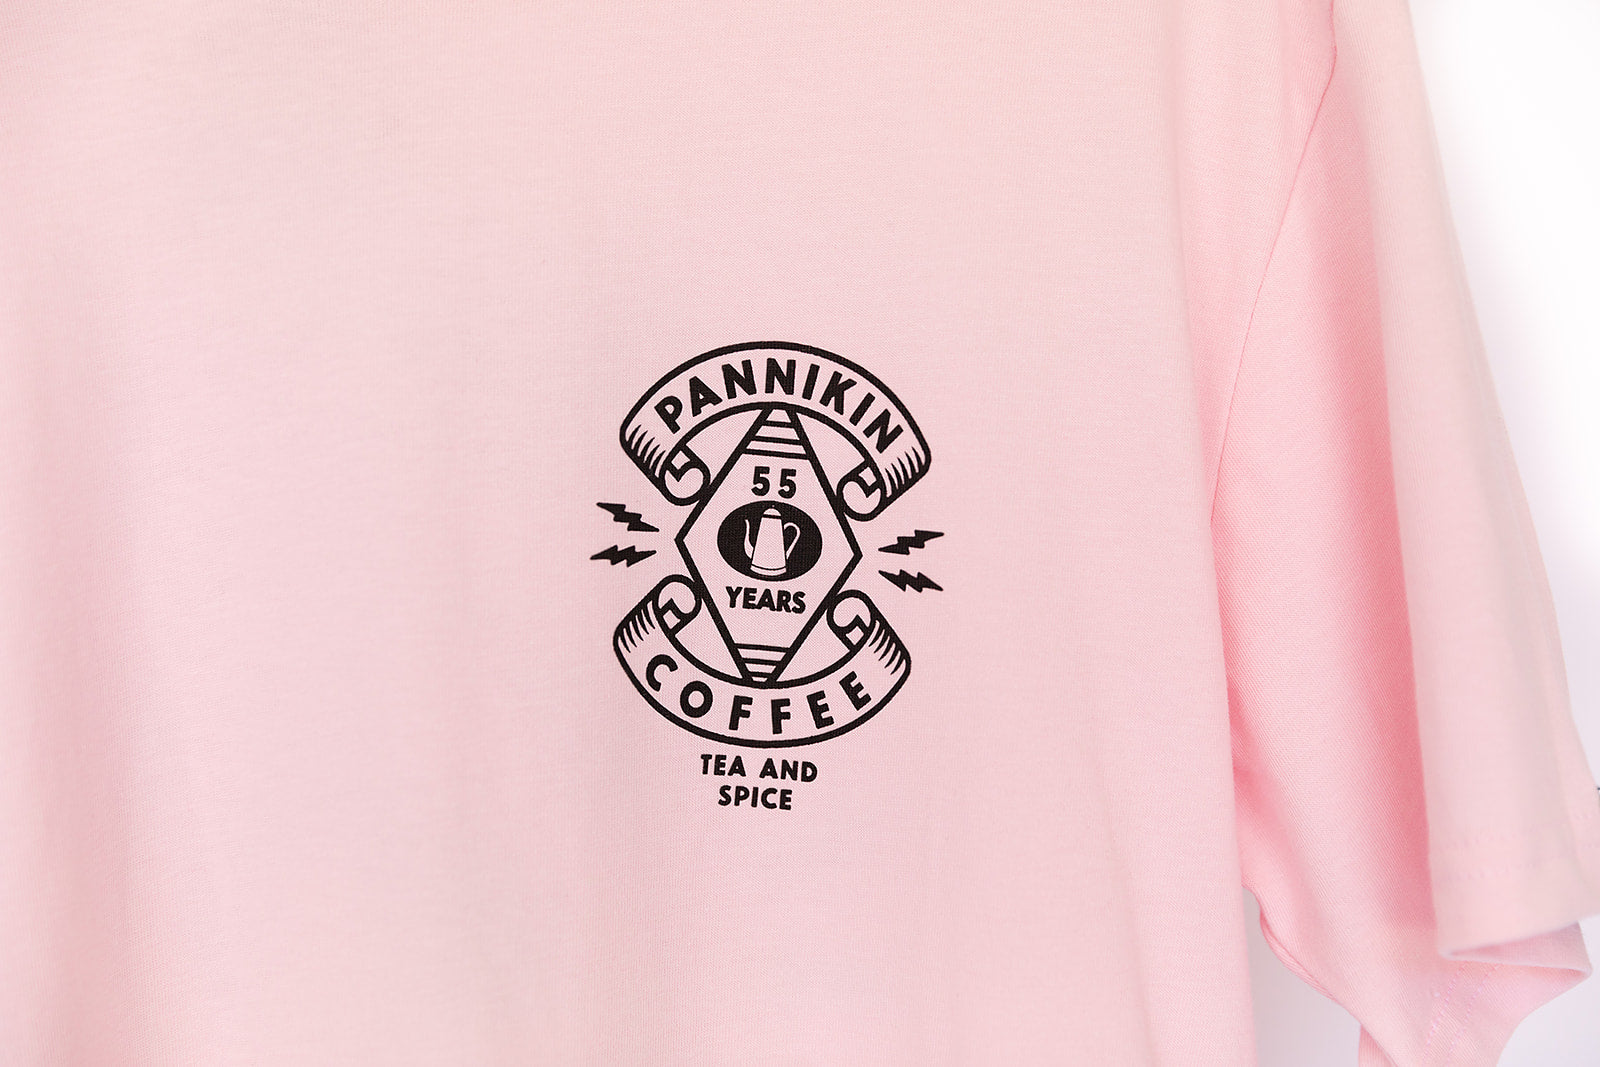 Pannikin 55th Anniversary T-Shirt-Pink